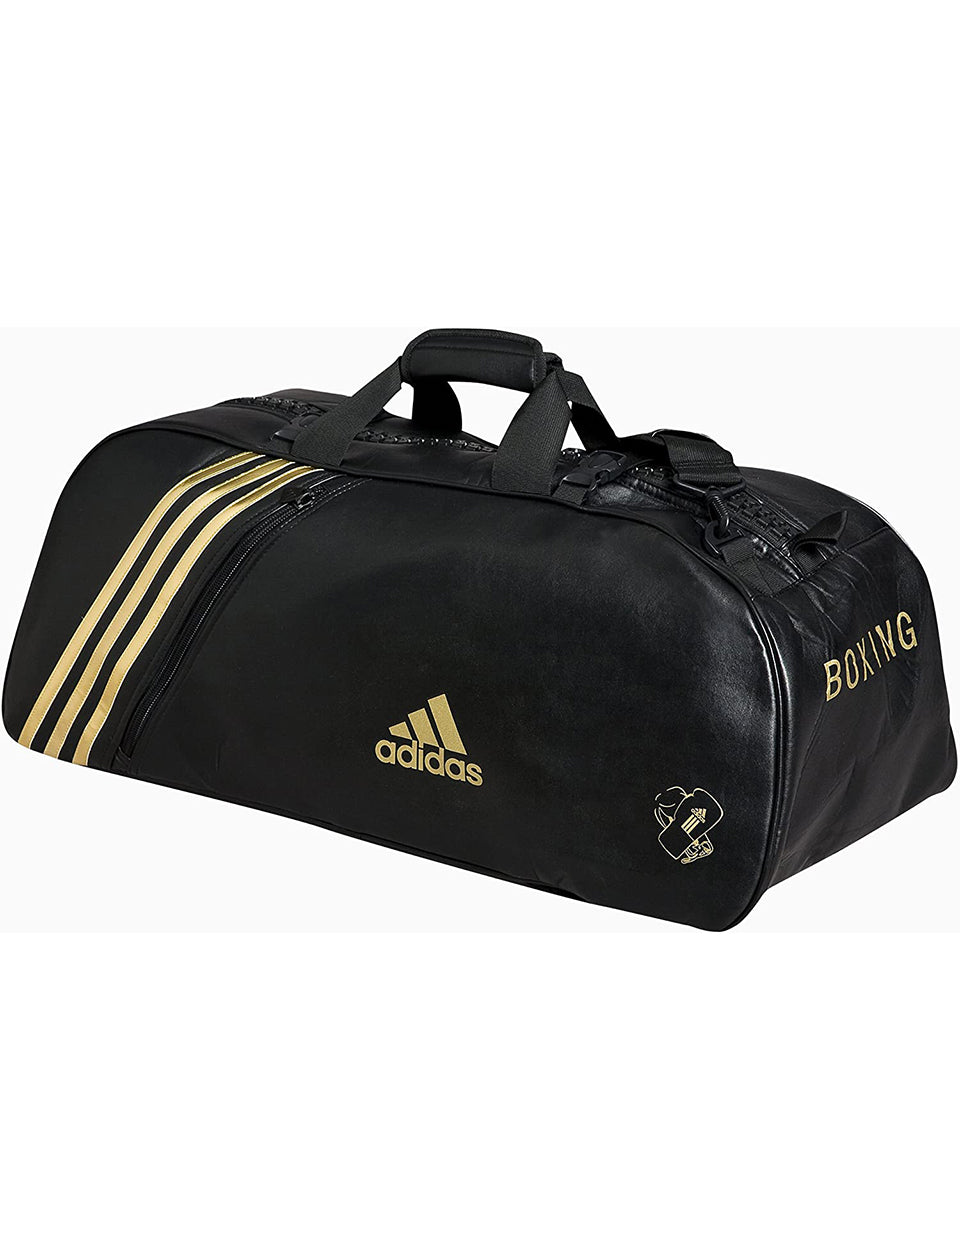 Adidas Super Sport Bag, Black